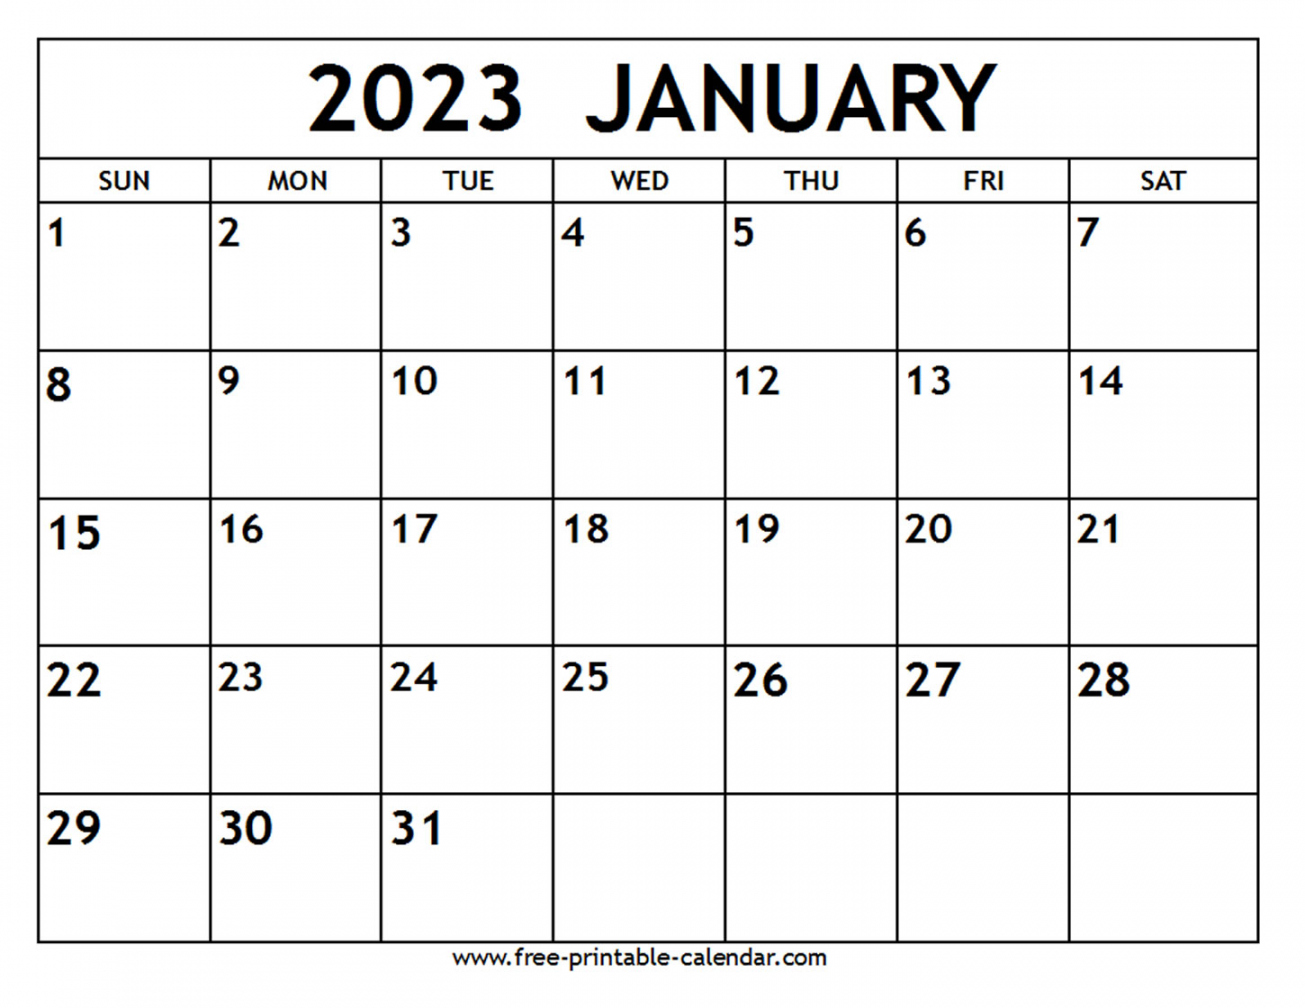 January  Calendar - Free-printable-calendar - January Free Printable Calendar 2023